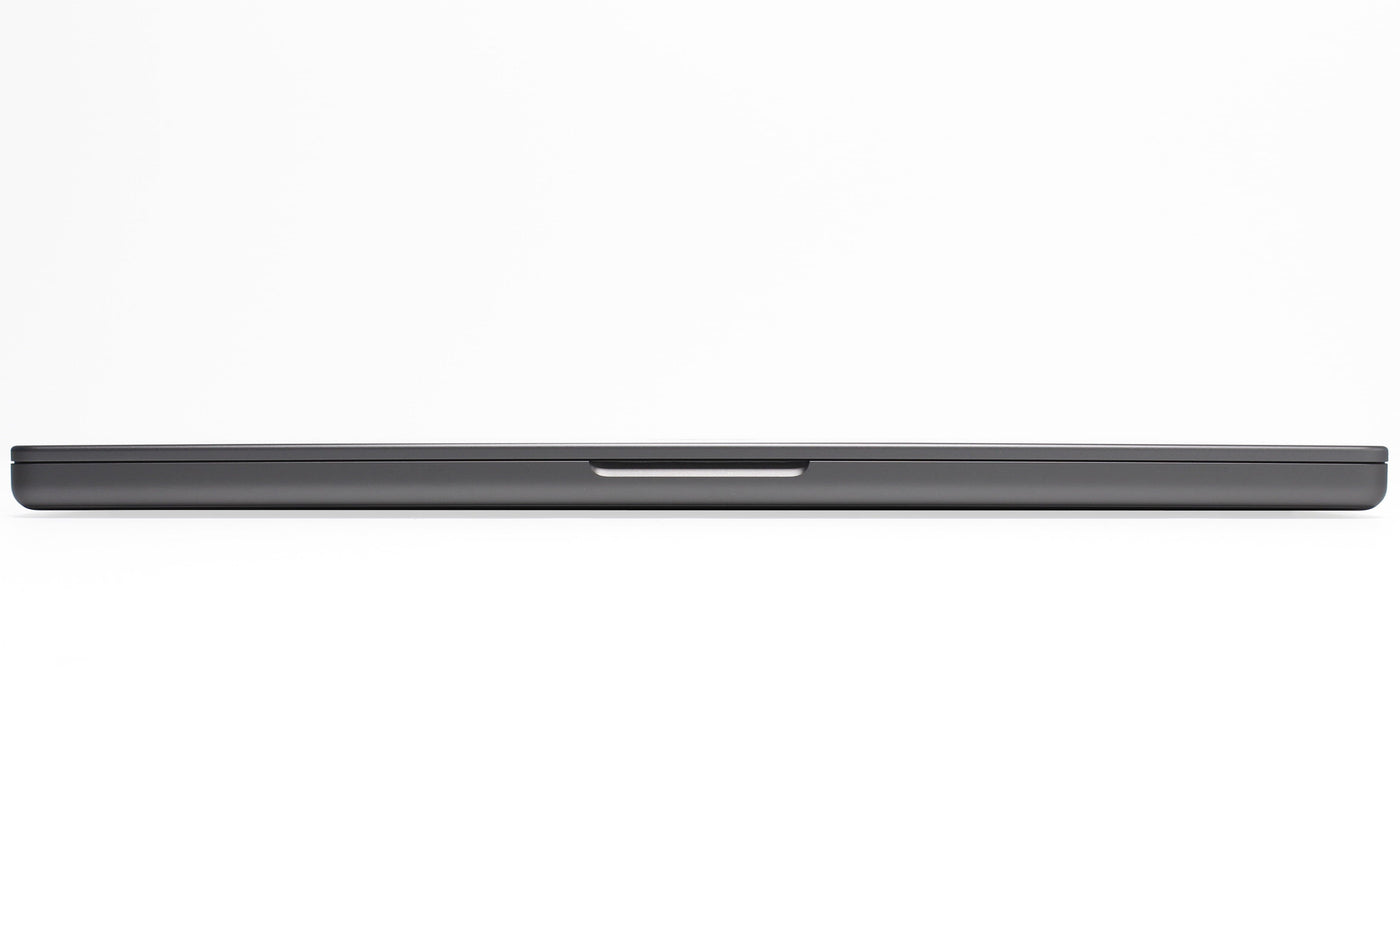 Apple MacBook Pro 16-inch MacBook Pro 16-inch M1 Max 10-core (Space Grey, 2021) - Fair